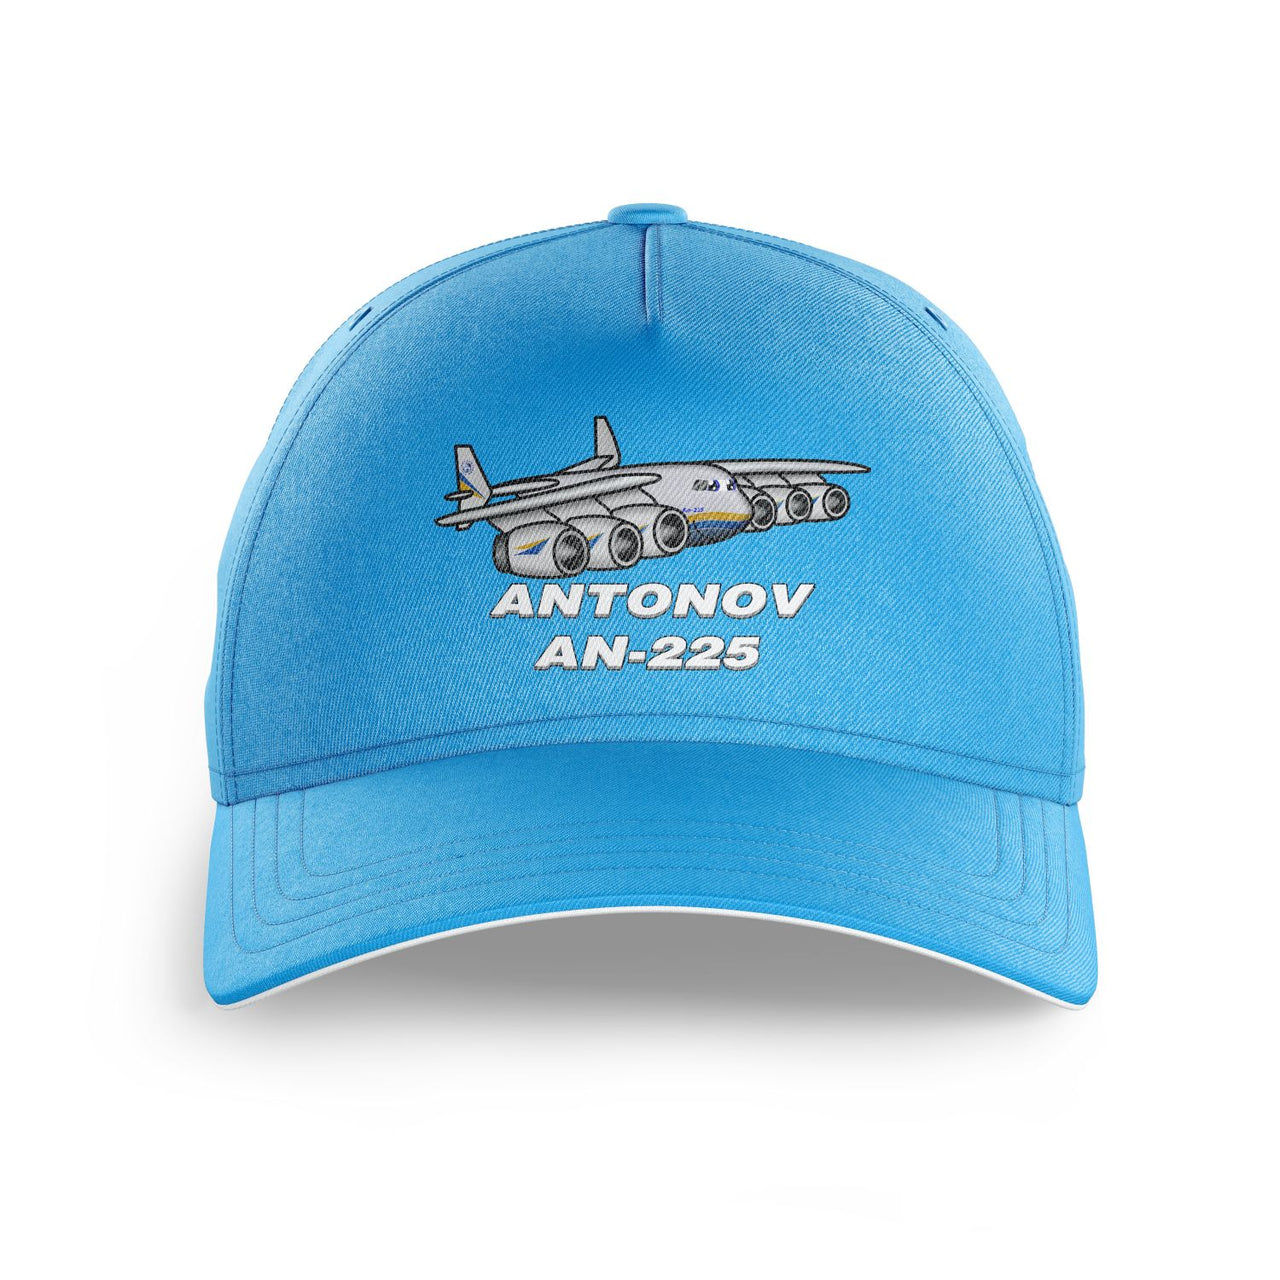 Antonov AN-225 (25) Printed Hats